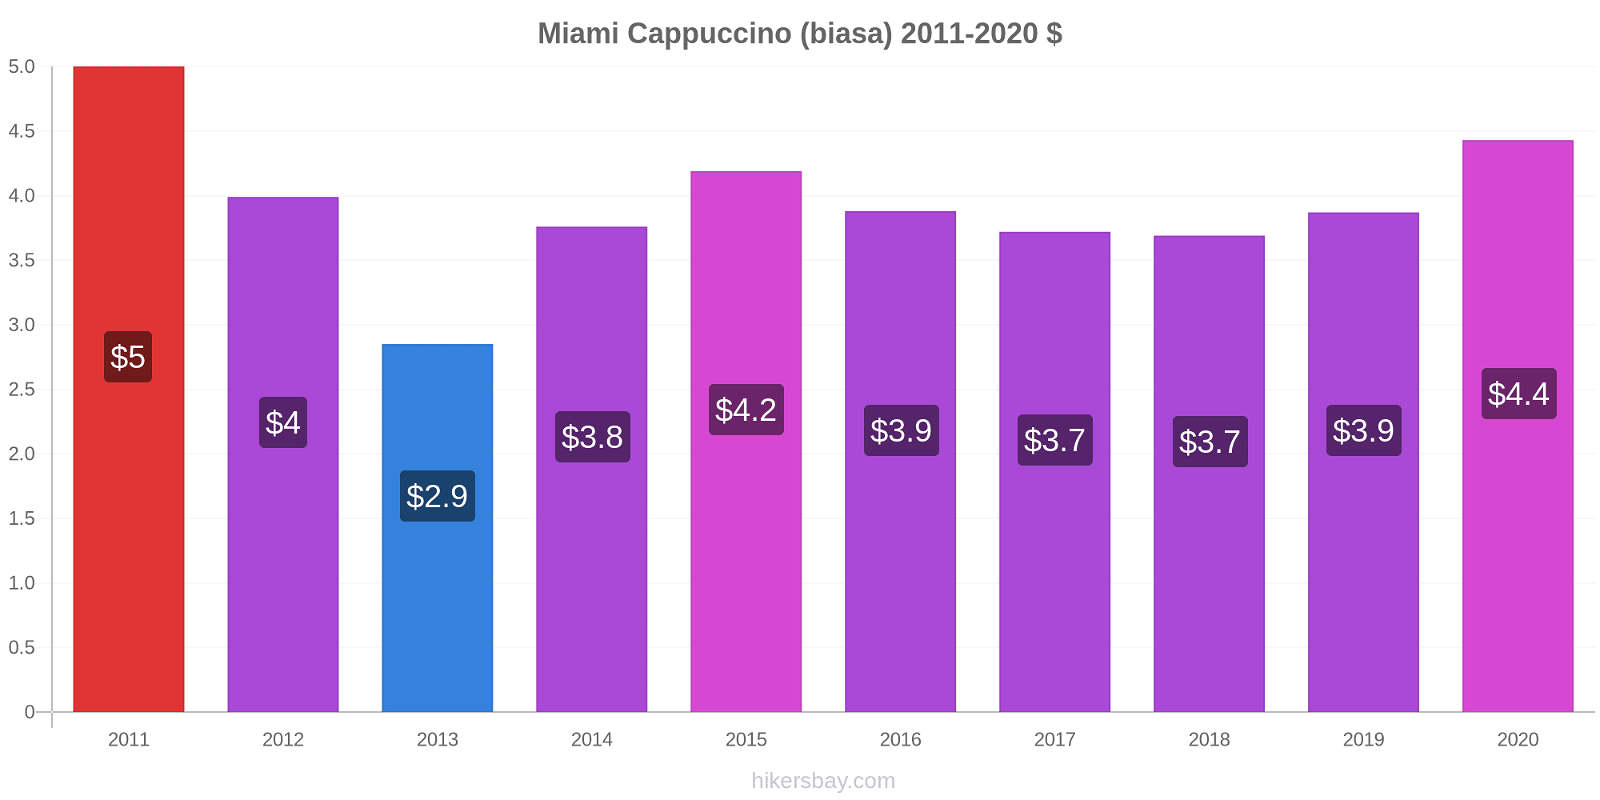 Miami perubahan harga Cappuccino (biasa) hikersbay.com